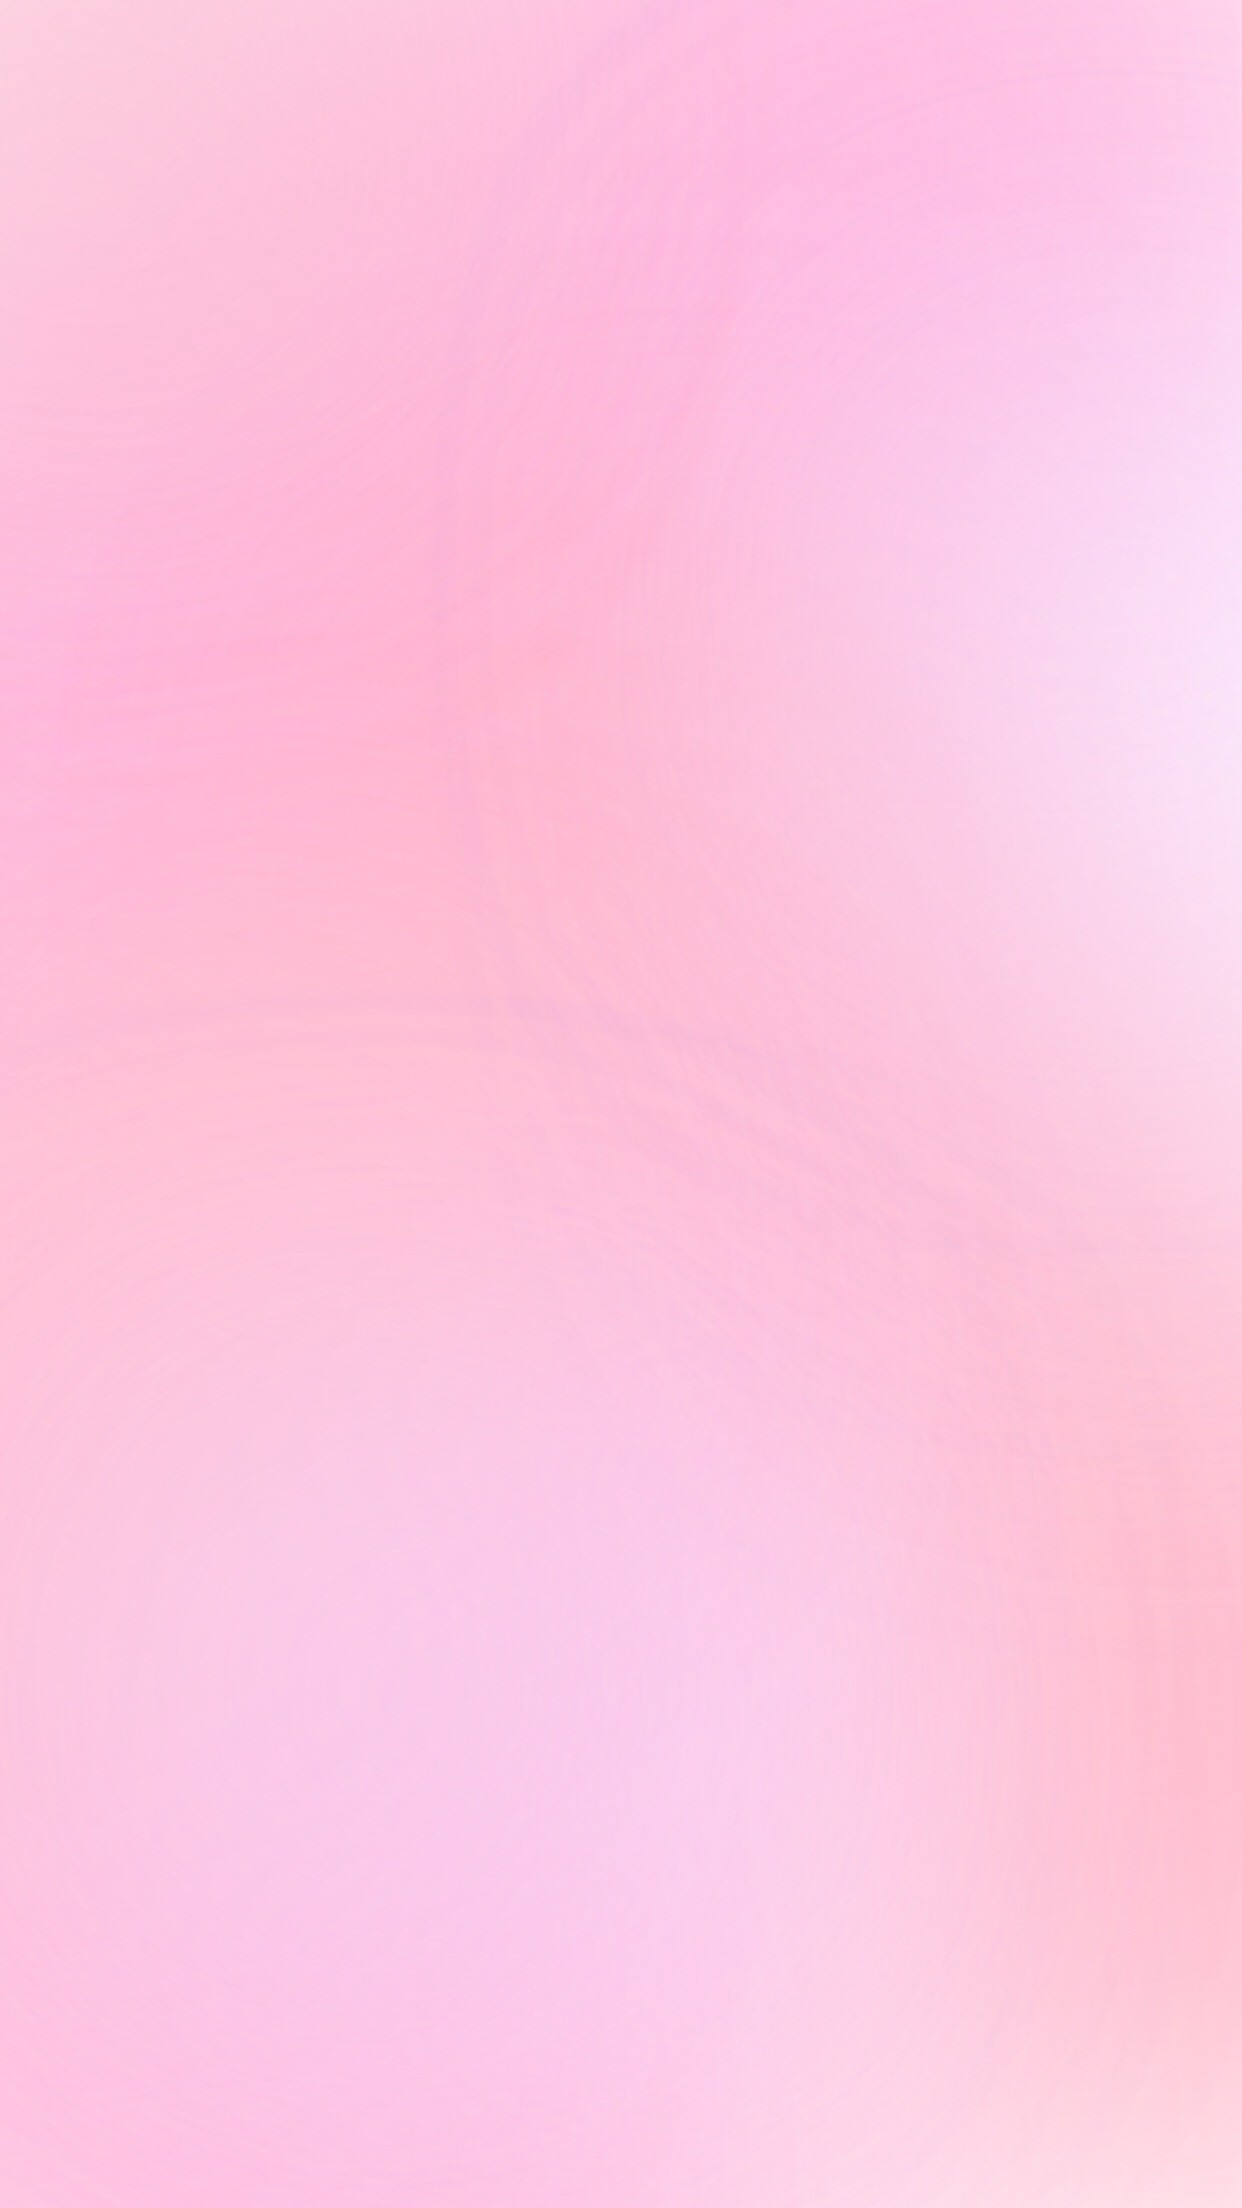 1242x2208 Pastel pink ombre (gradient) phone wallpaper